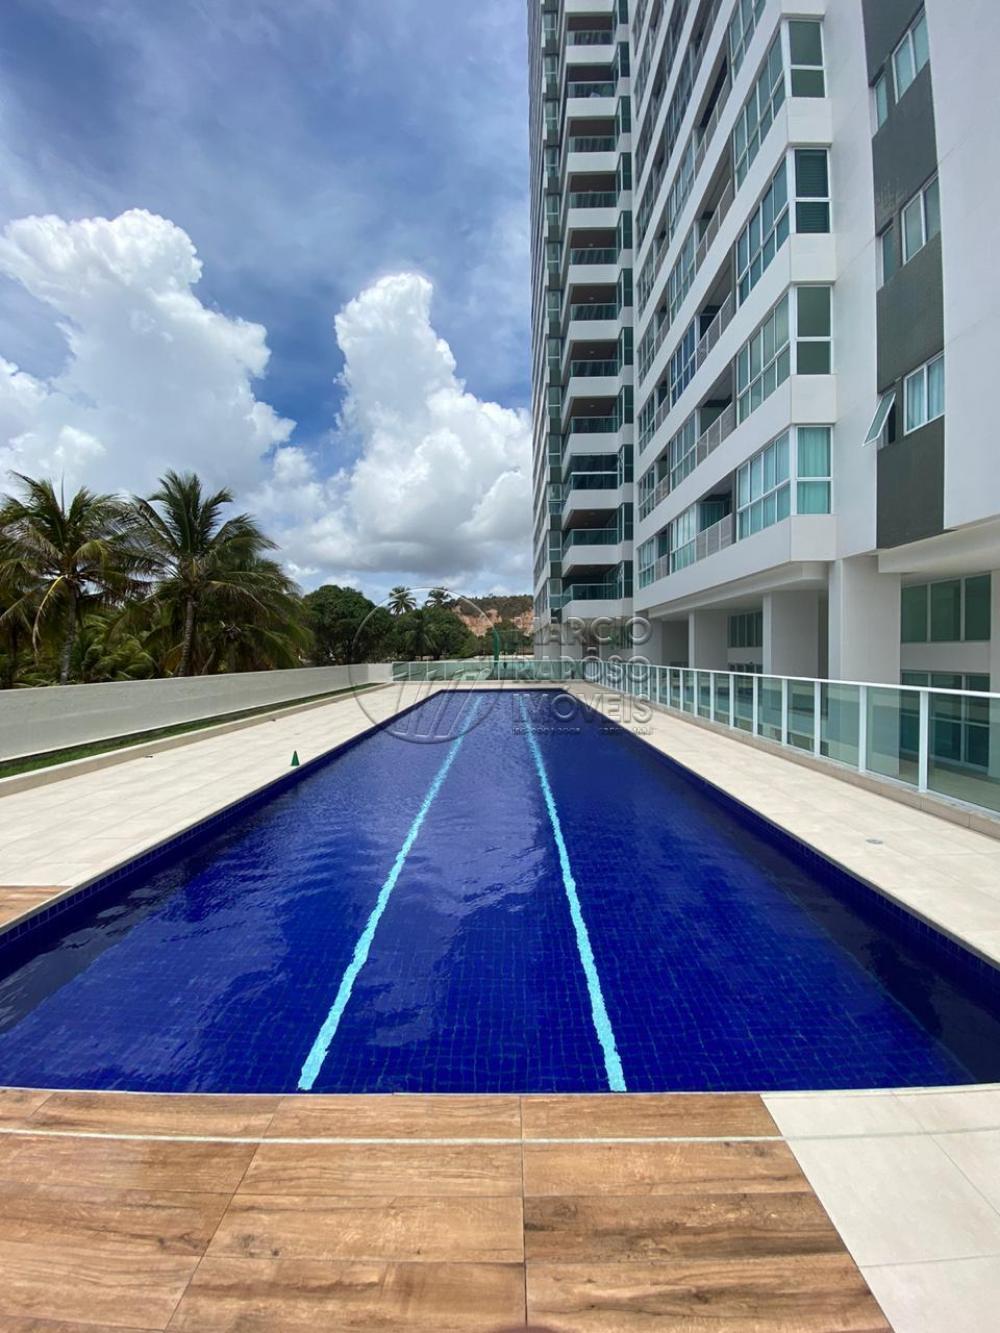 EDIFÍCIO GREEN VILLAGE 

cobertura de 220m² para venda.

possui:
- 3 suítes;
- sala de estar e jantar;
- DCE;
- piscina privativa;
- área gourmet.
